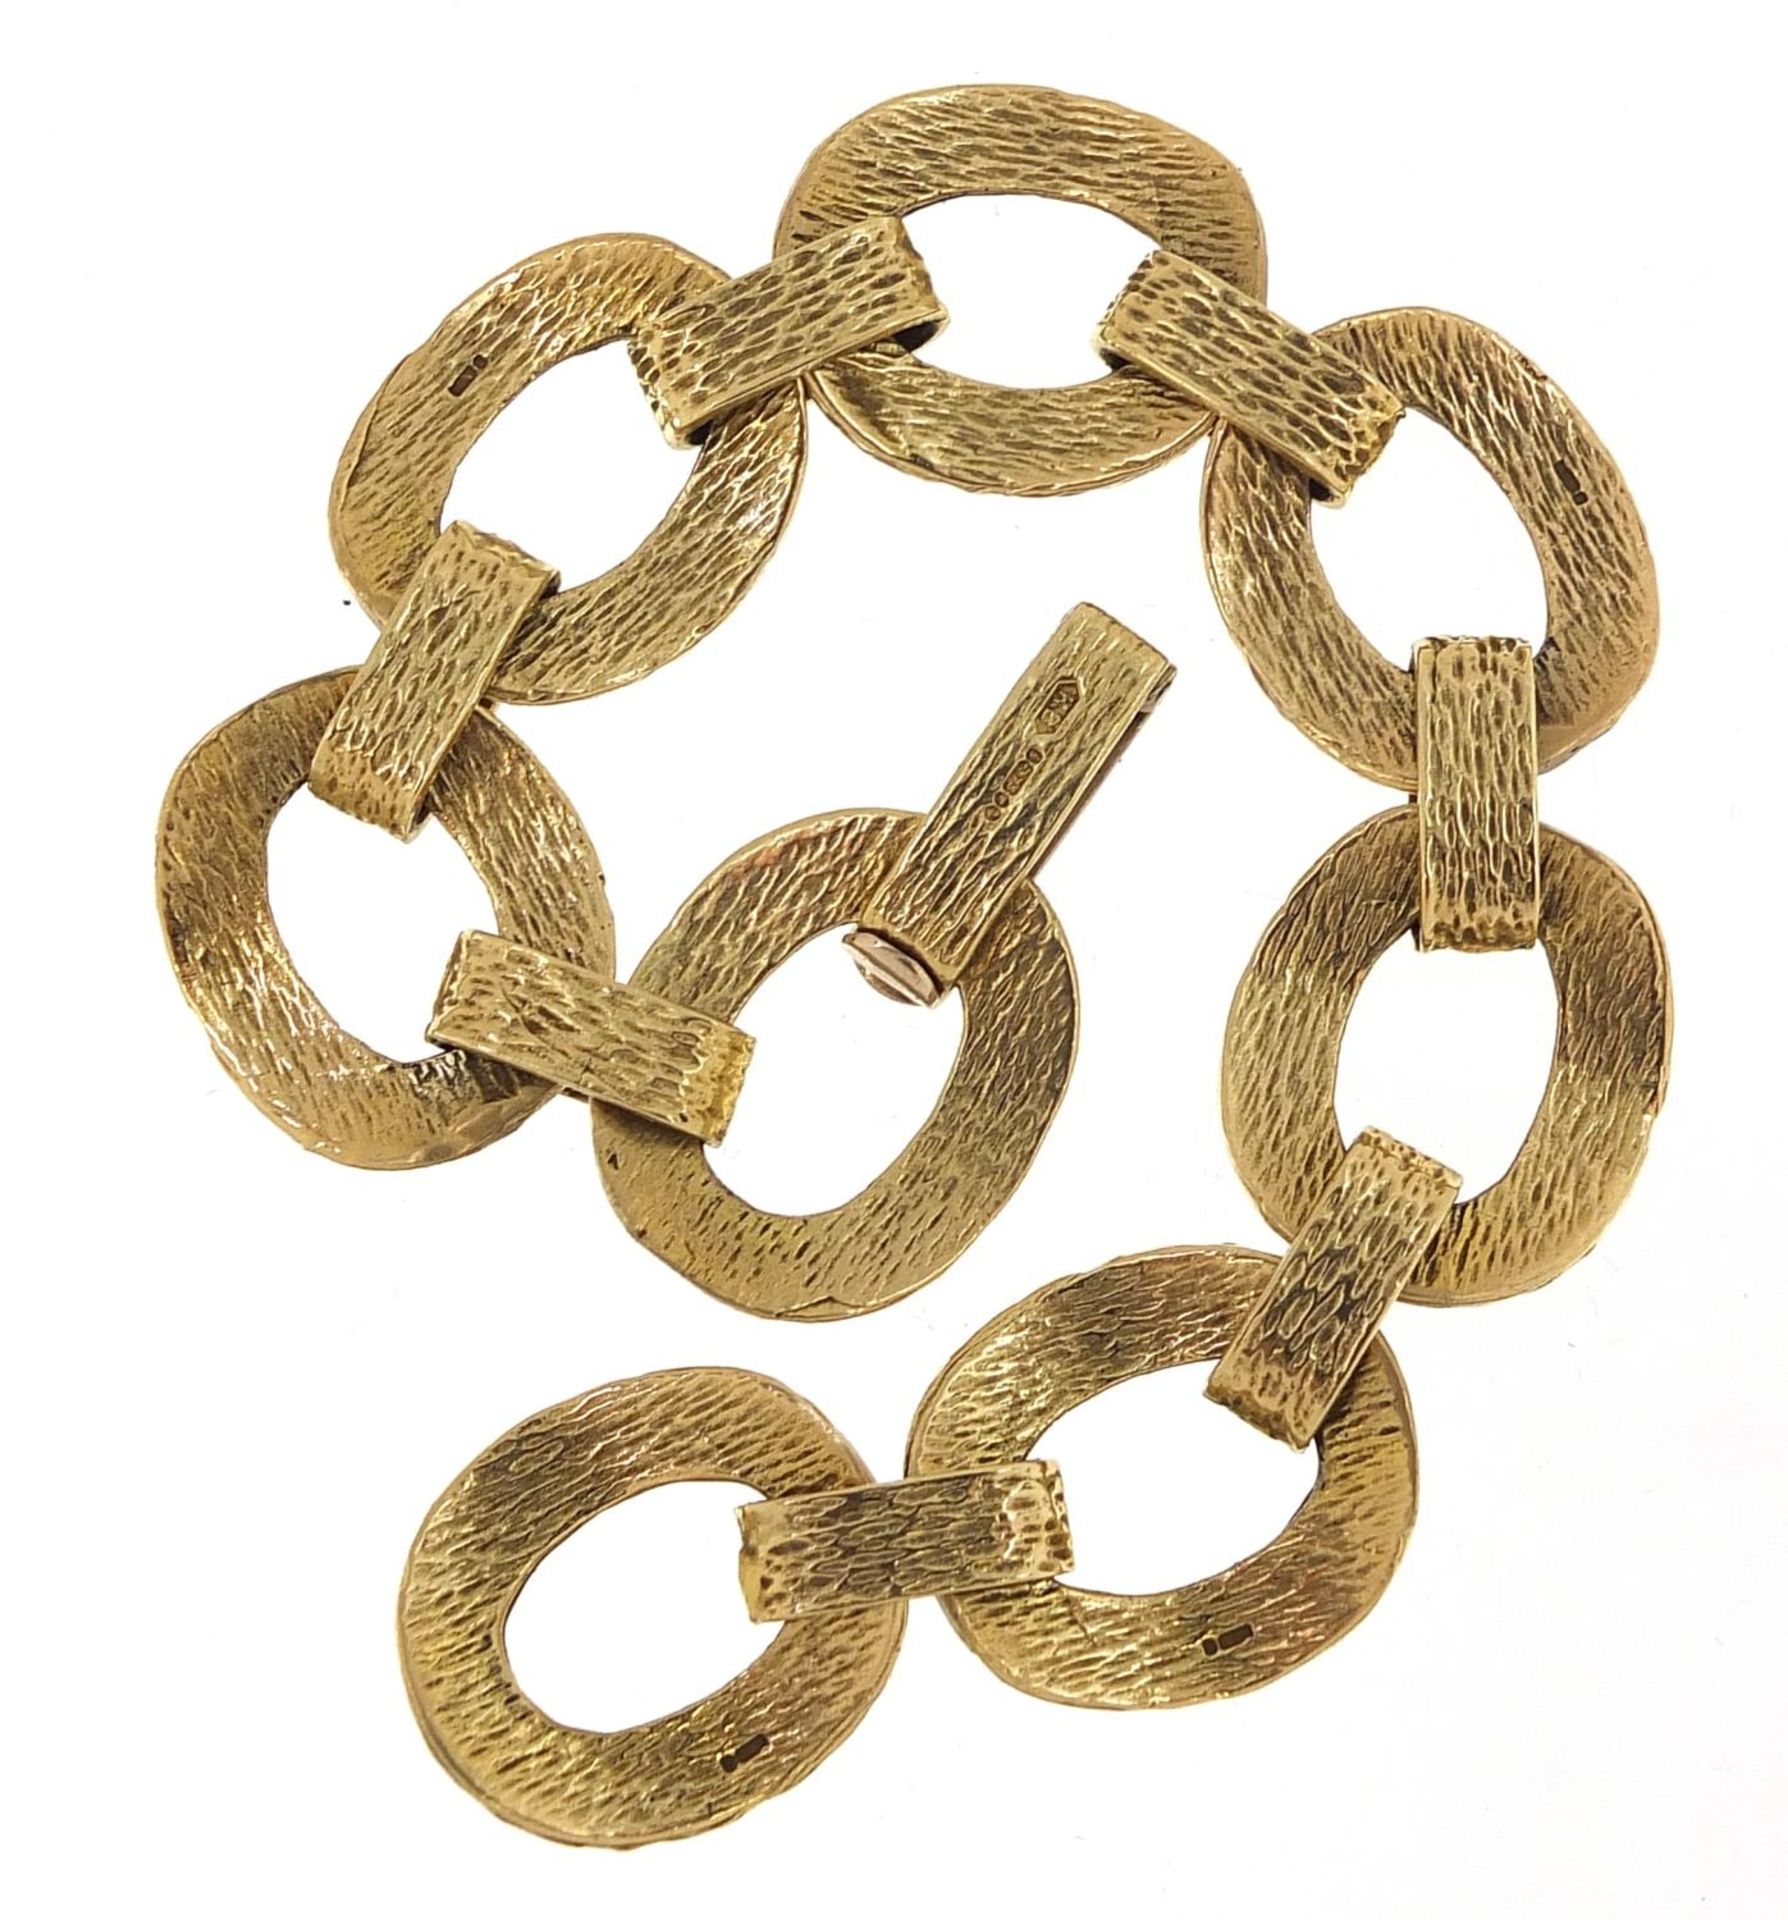 1970s 9ct gold bark design bracelet with oval links, HB makers mark, 18cm in length, 43.8g - Image 3 of 4